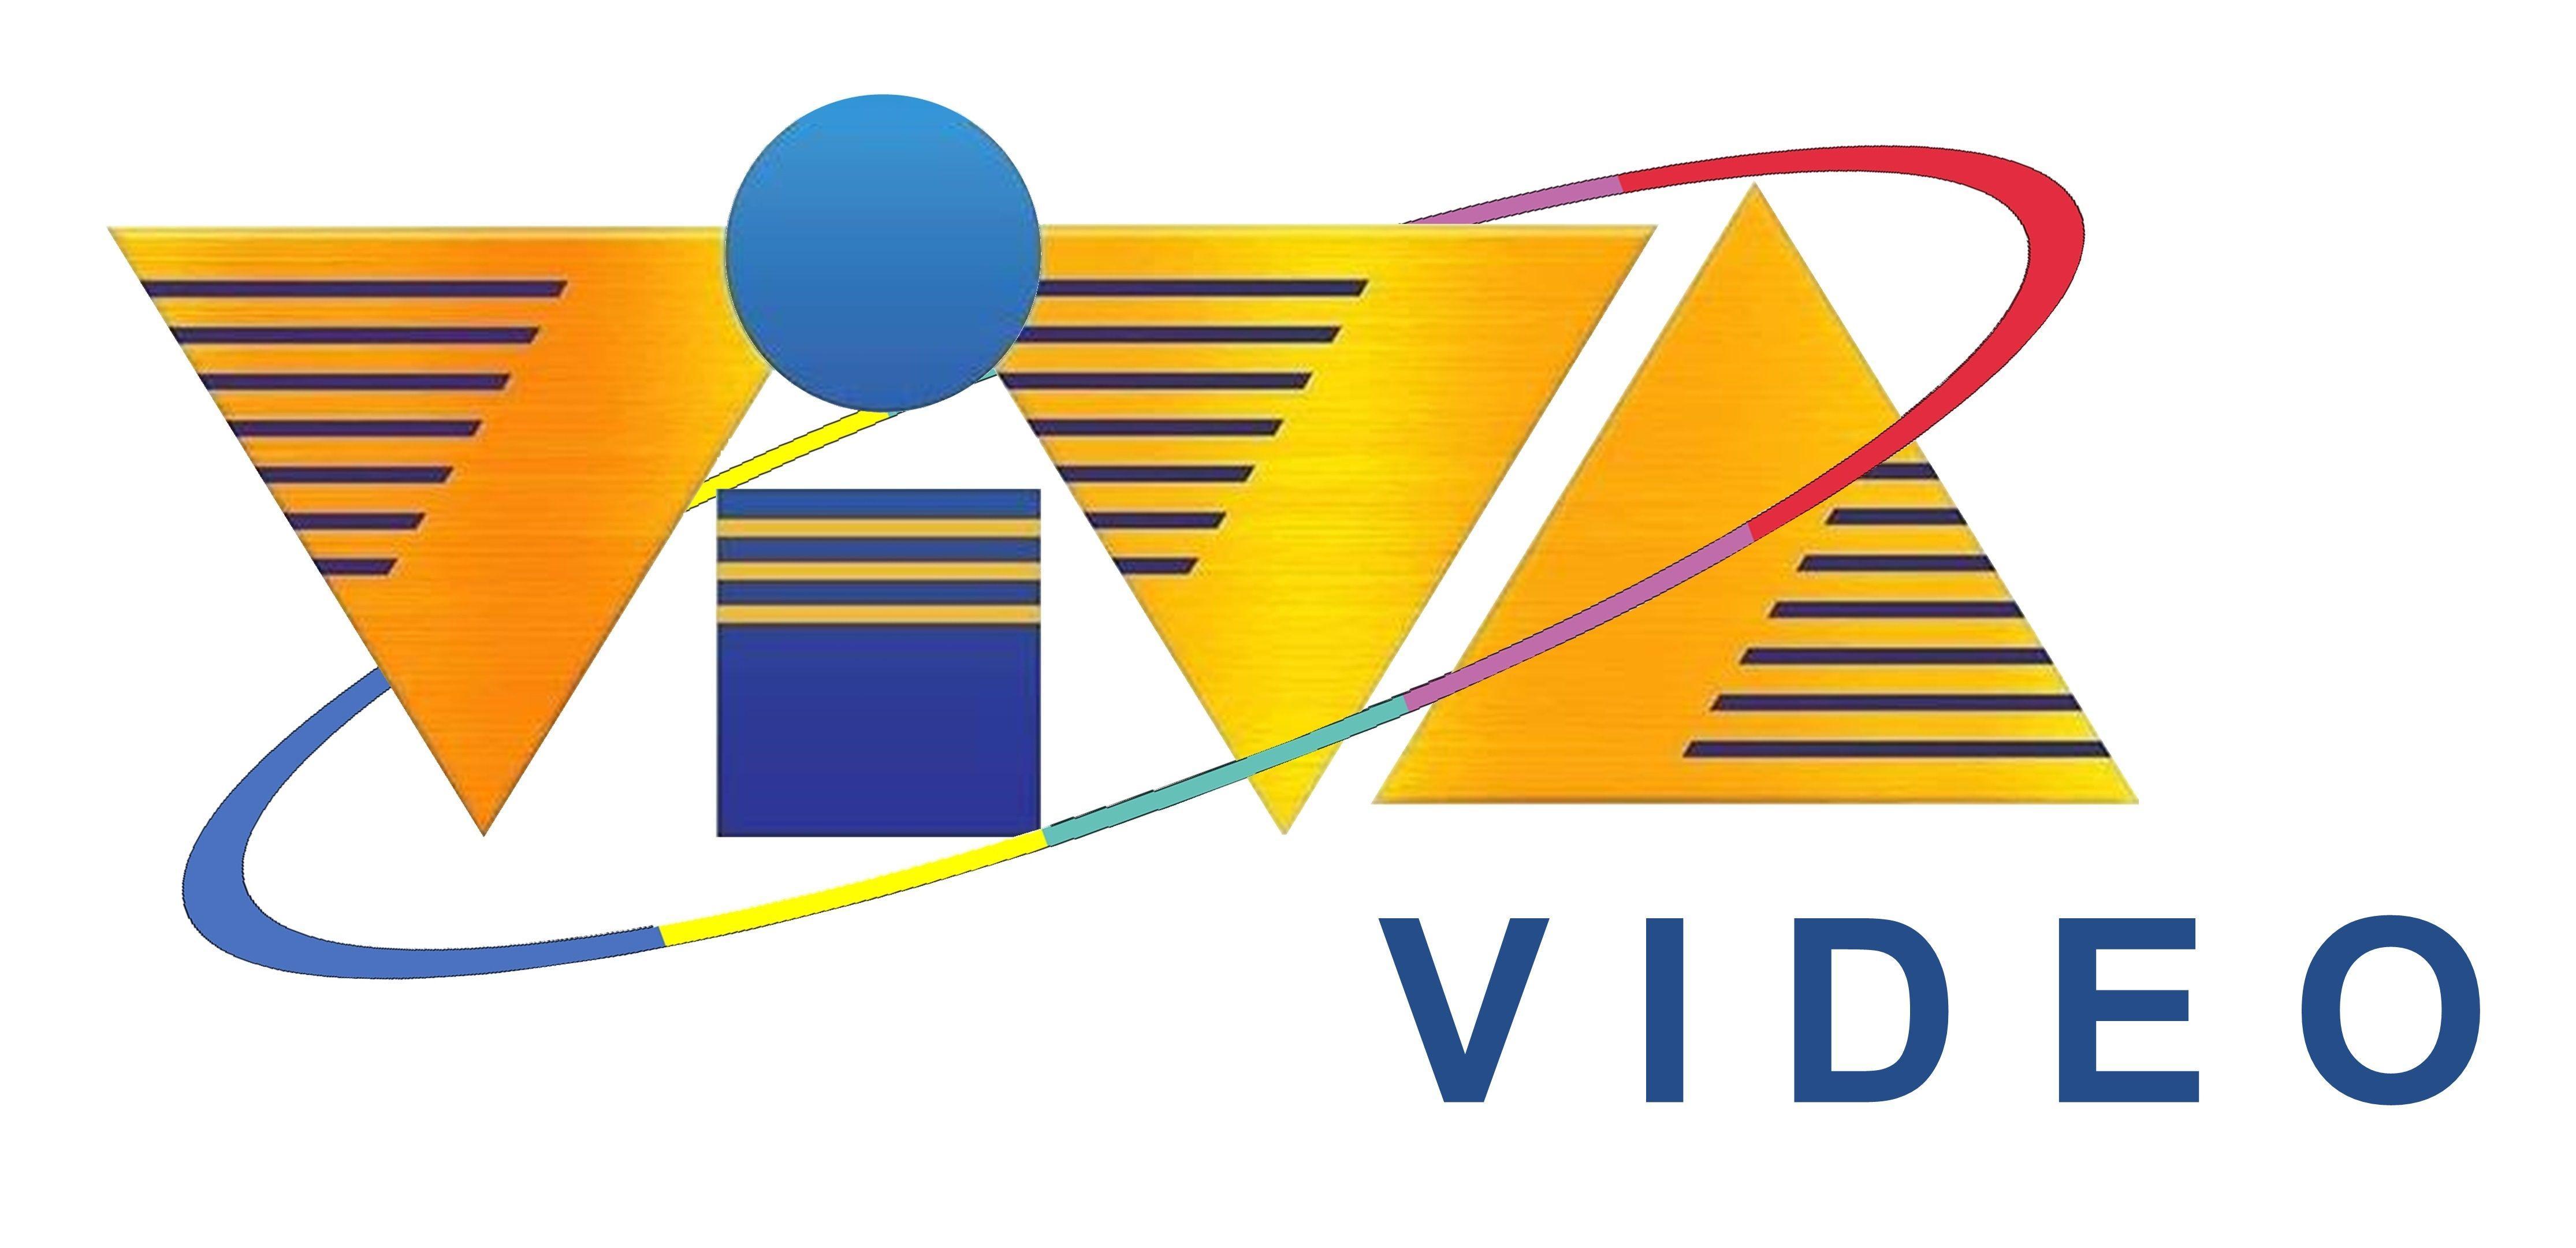 Viva Logo - Image - VIVA-VIDEO-LOGO-2018.jpg | Logopedia | FANDOM powered by Wikia